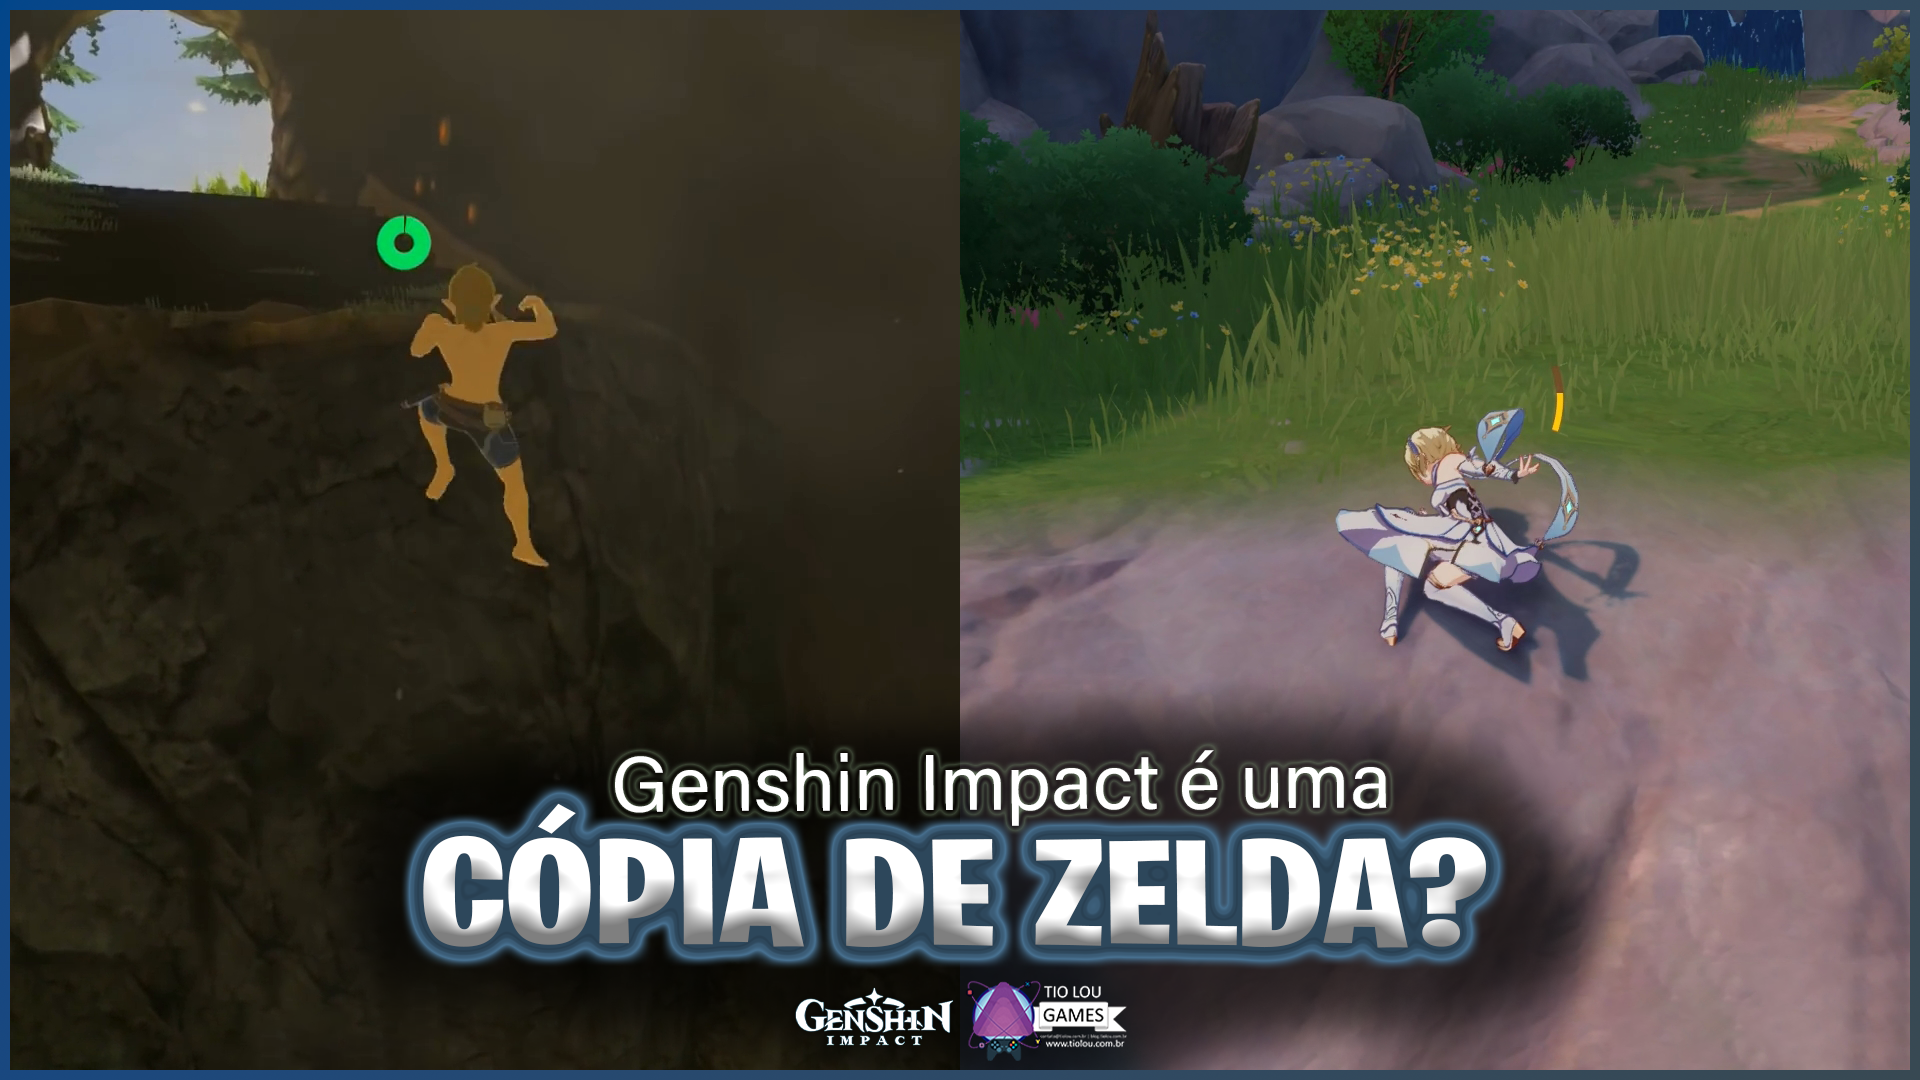 Genshin Impacr copiou Zelda